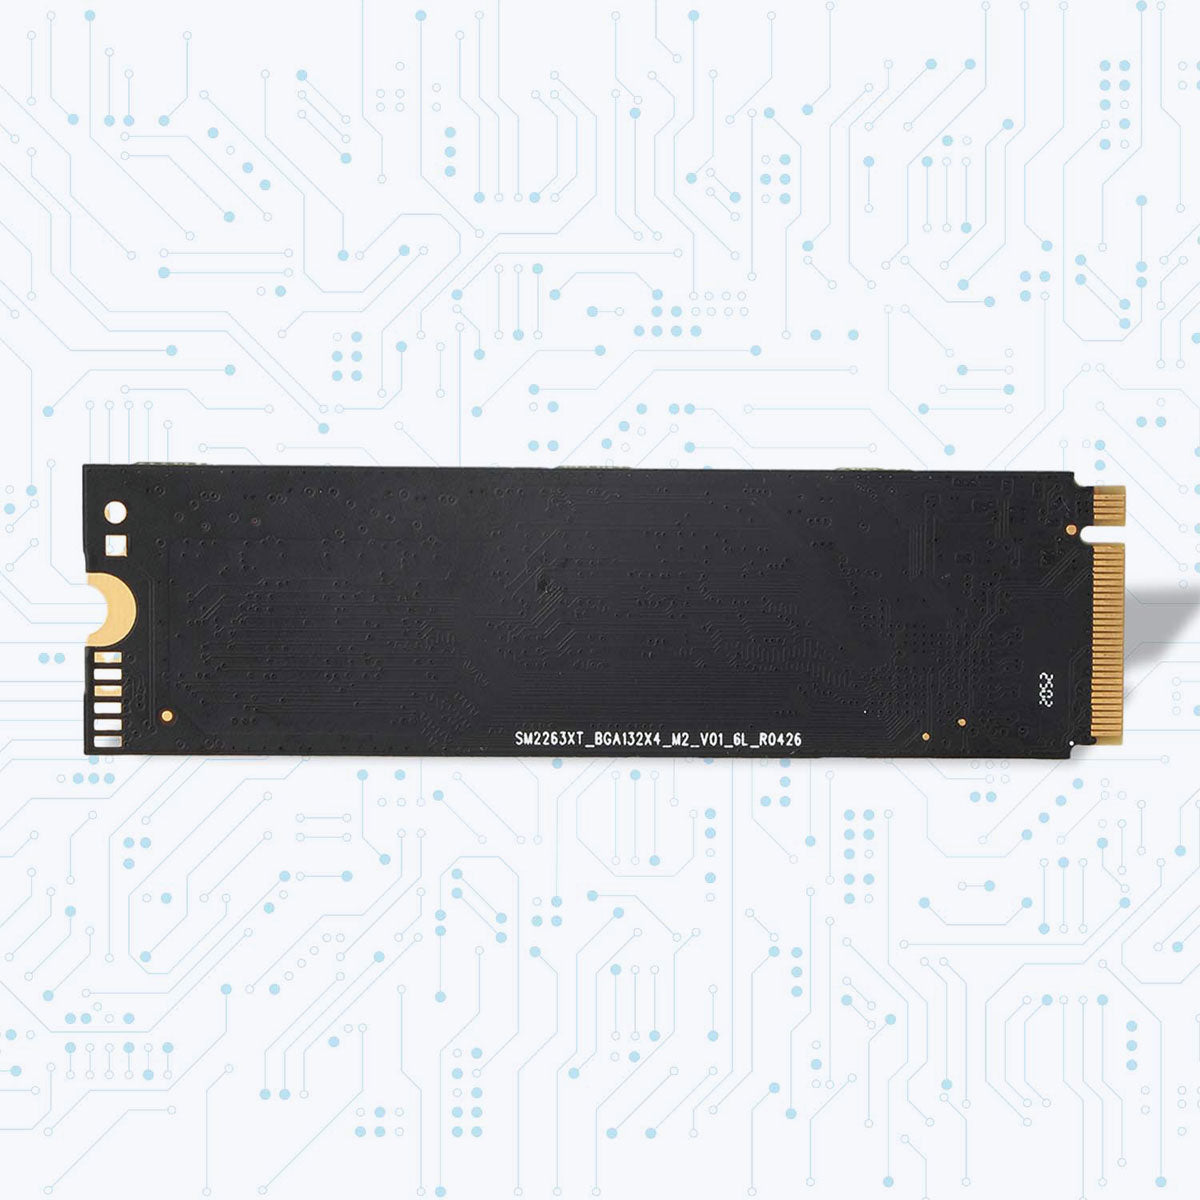 ZEB-MN26 - SSD - Zebronics